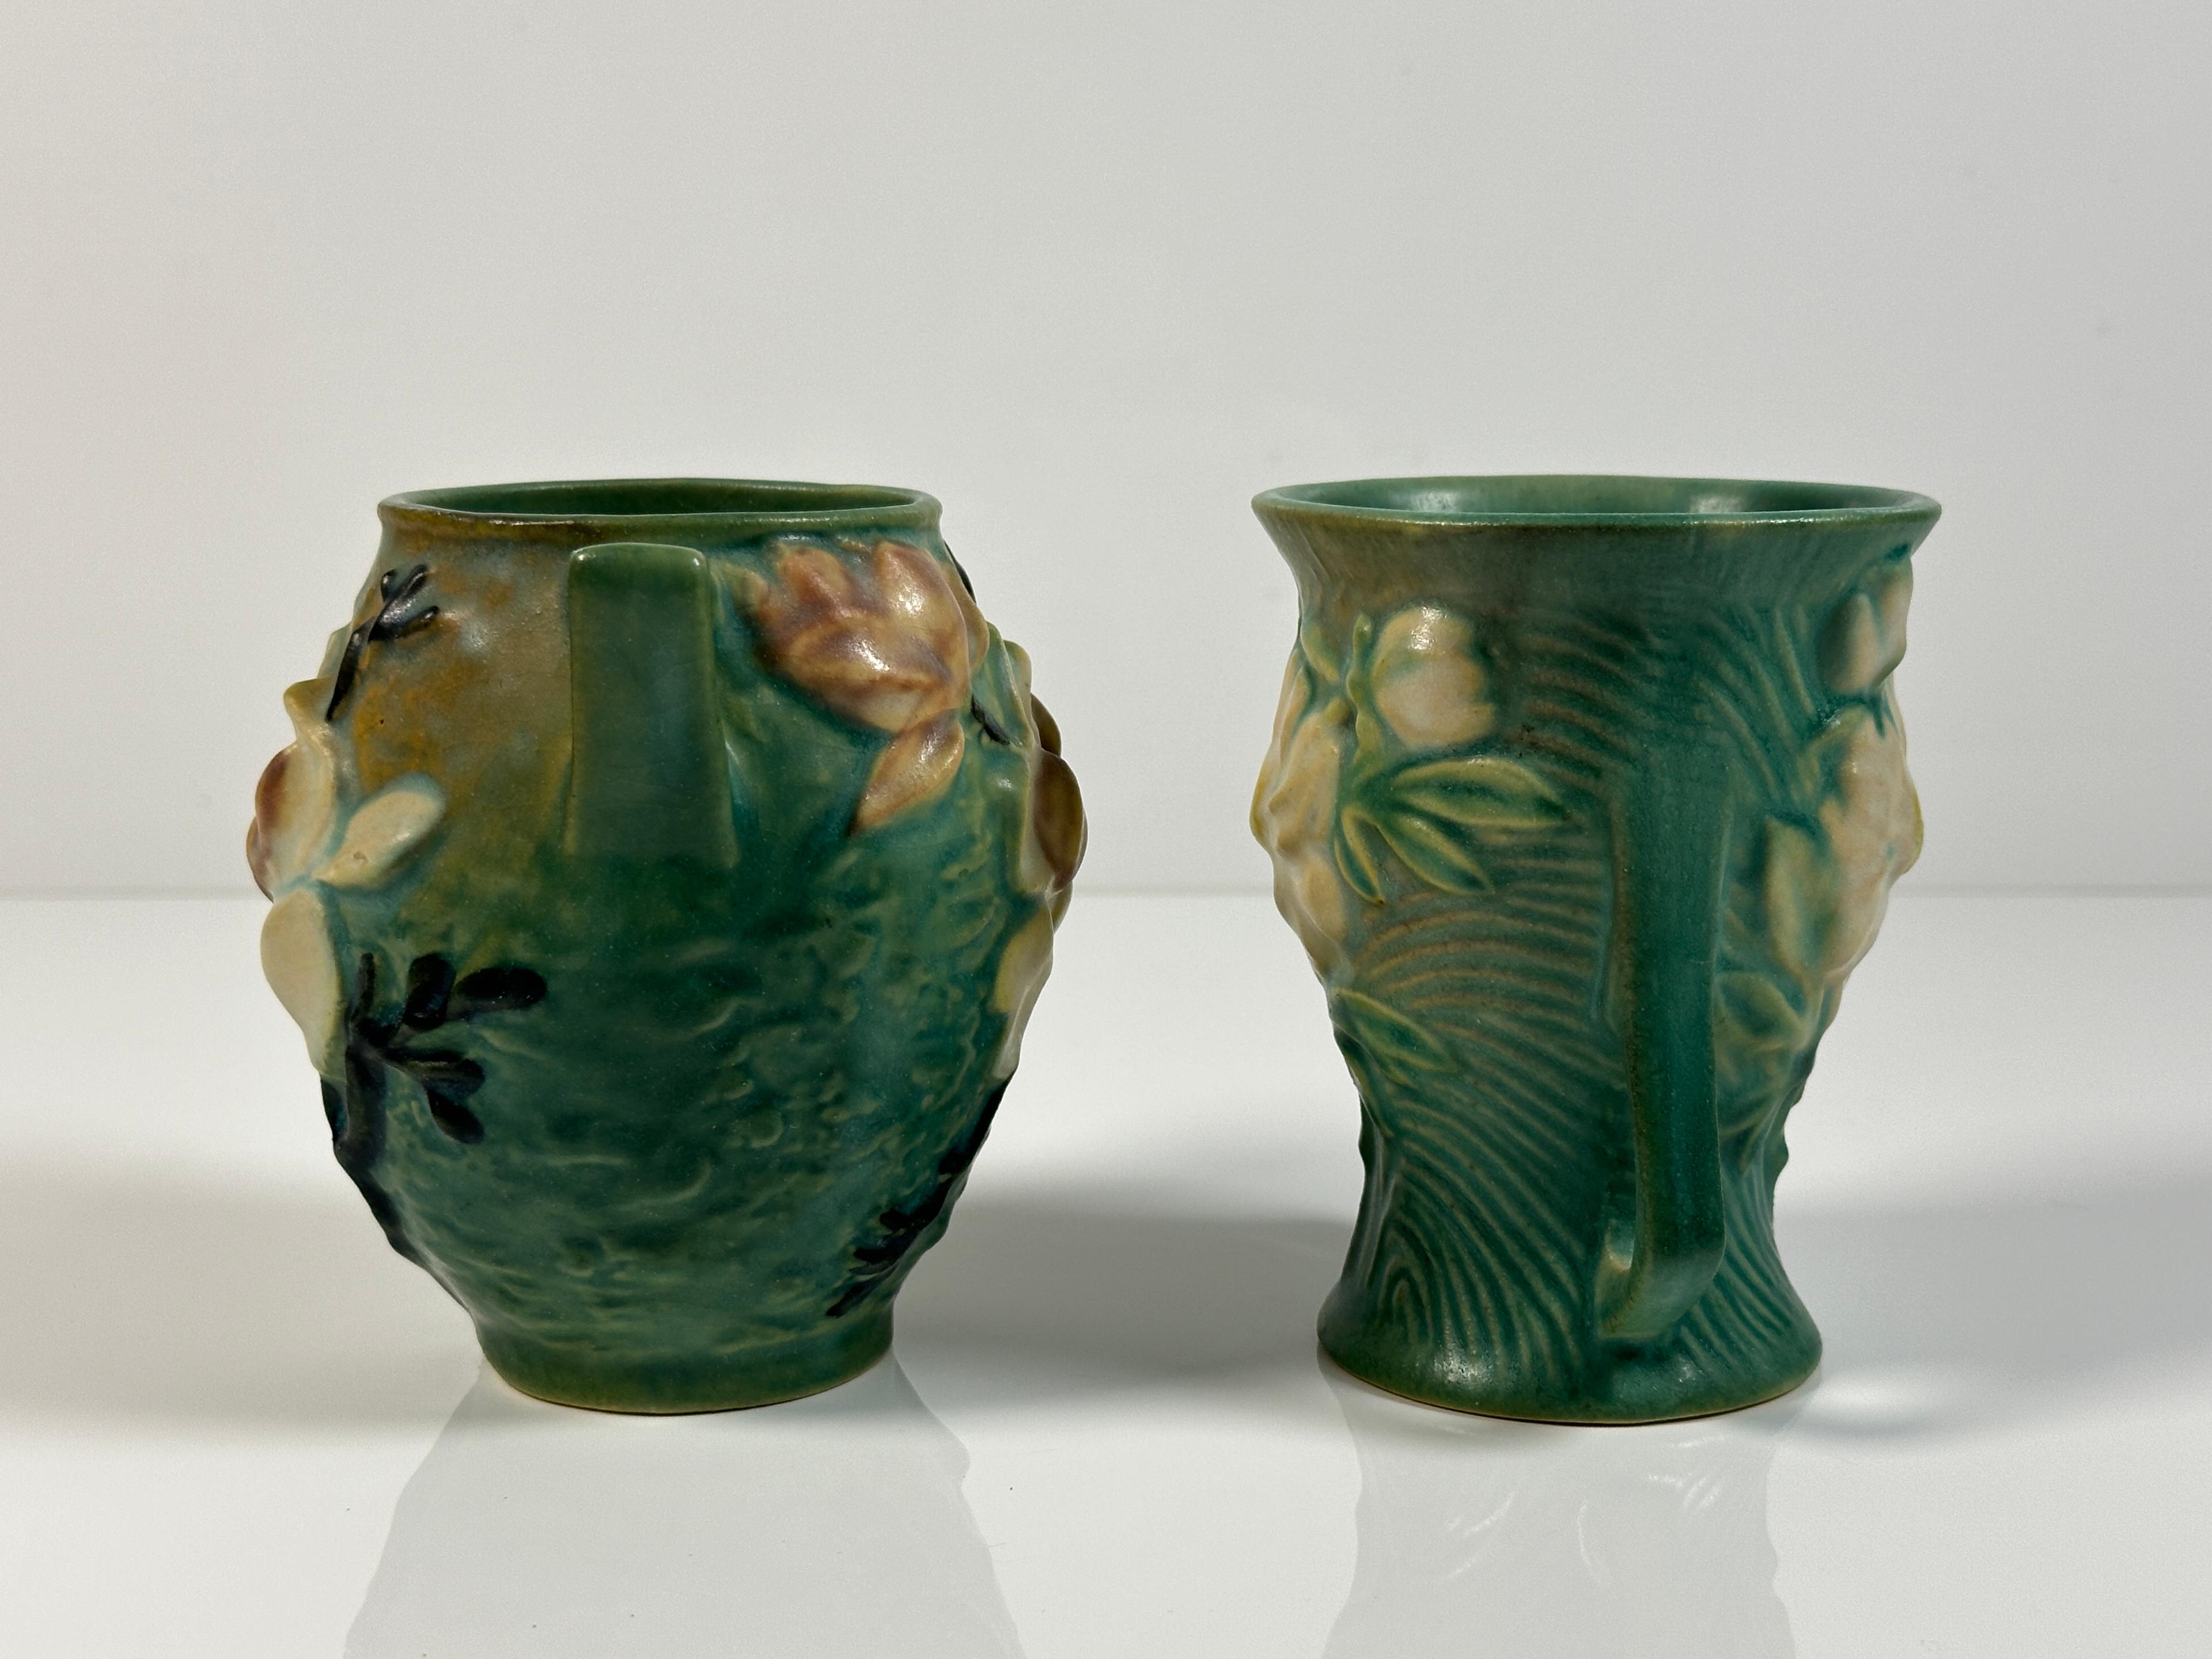 Two Roseville Cabinet Vases